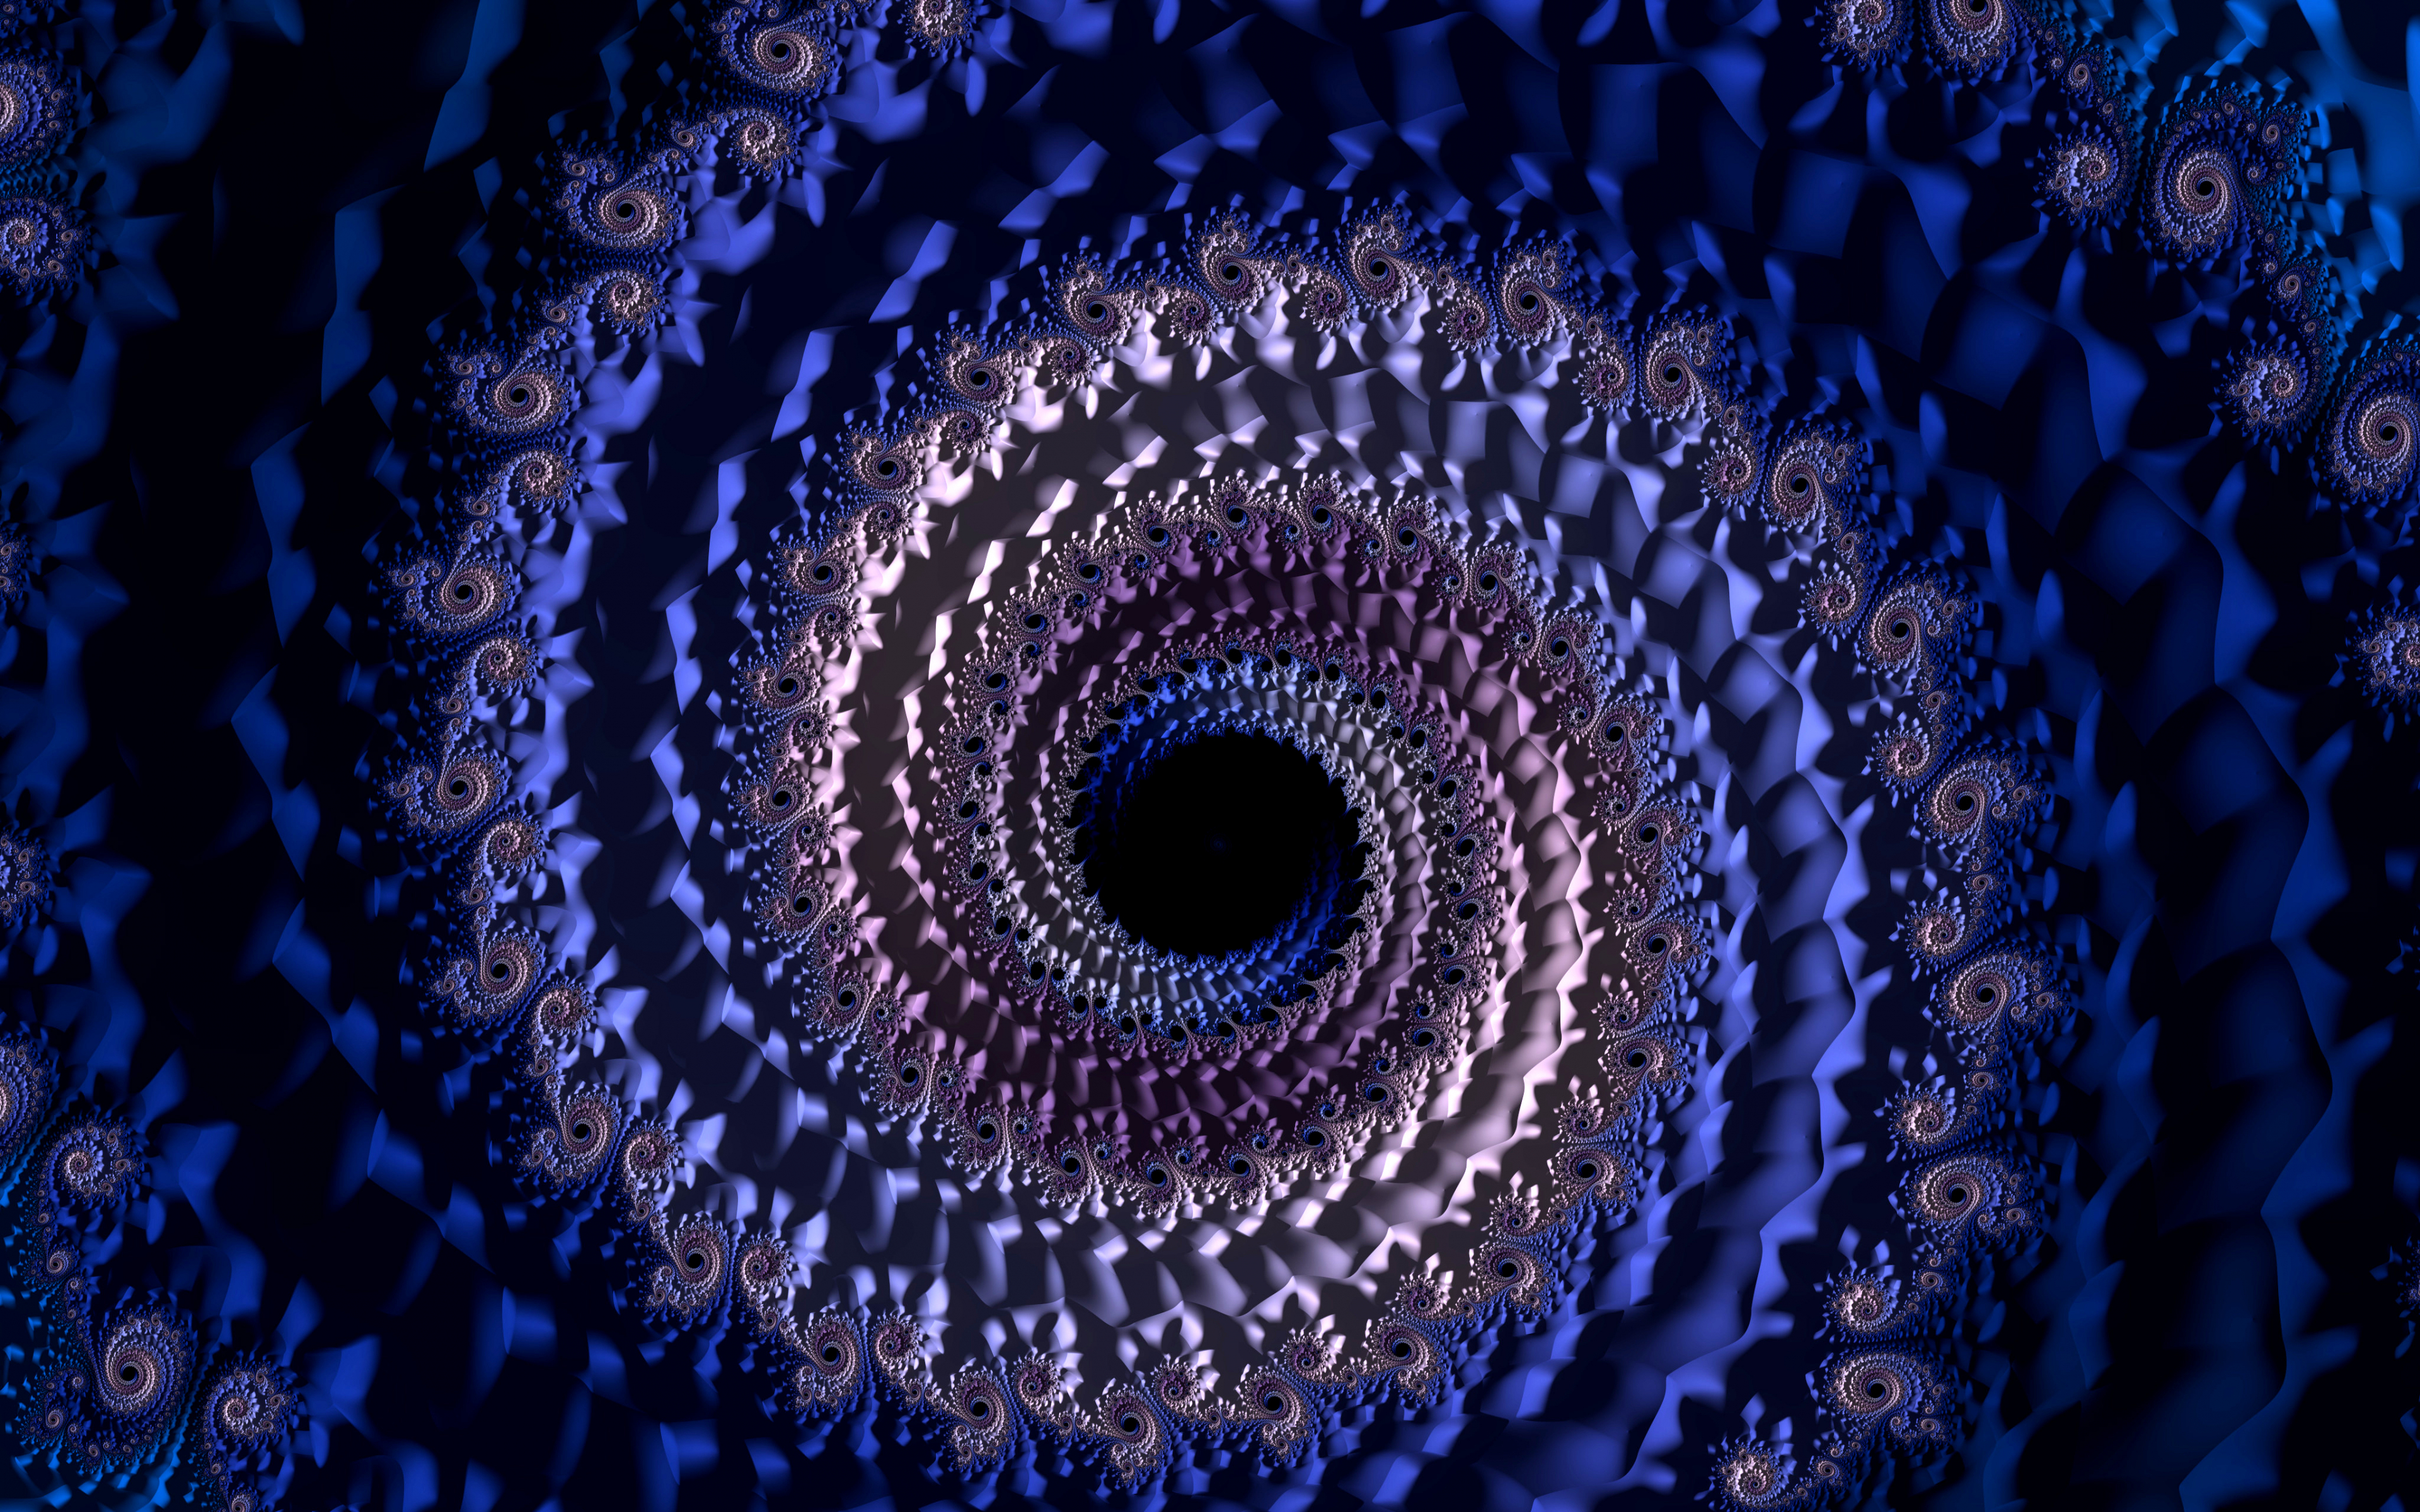 Download wallpaper 3840x2400 blue fractal, vortex, swirling, 3d 4k  wallaper, 4k ultra hd 16:10 wallpaper, 3840x2400 hd background, 22579